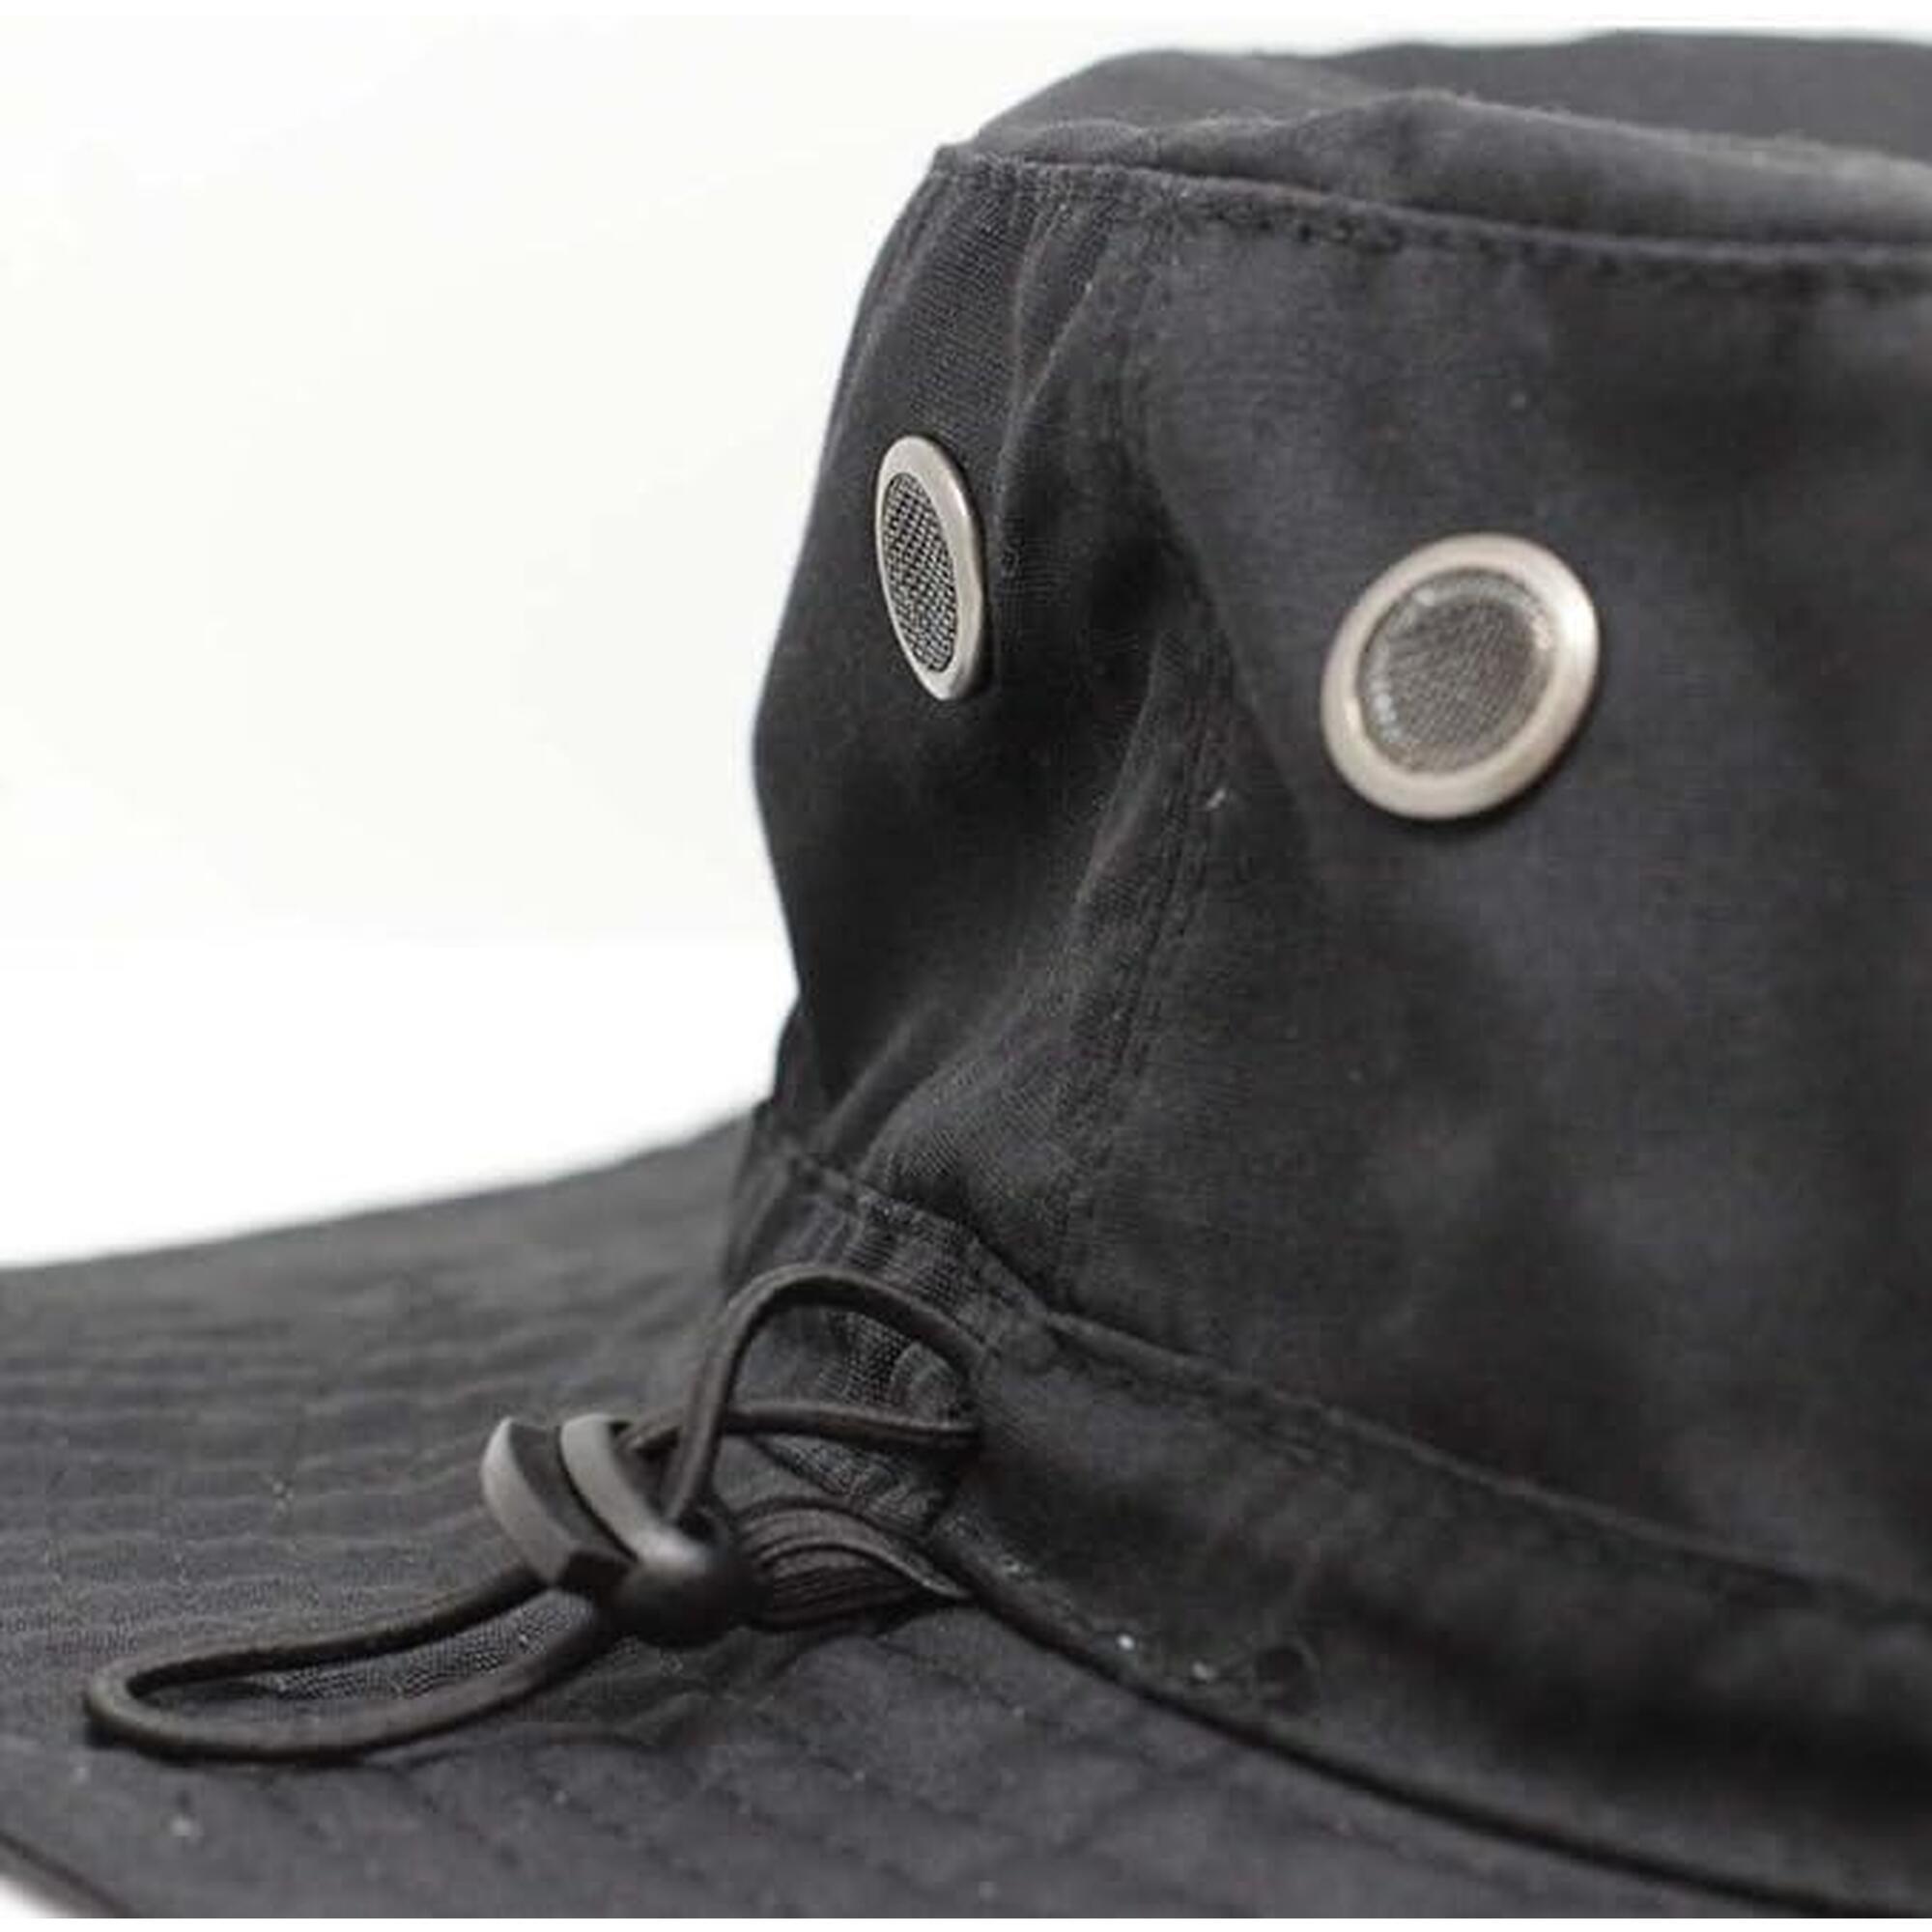 Sombrero de Protección Solar con Visera Flexible - UPF 50+ (Negro)